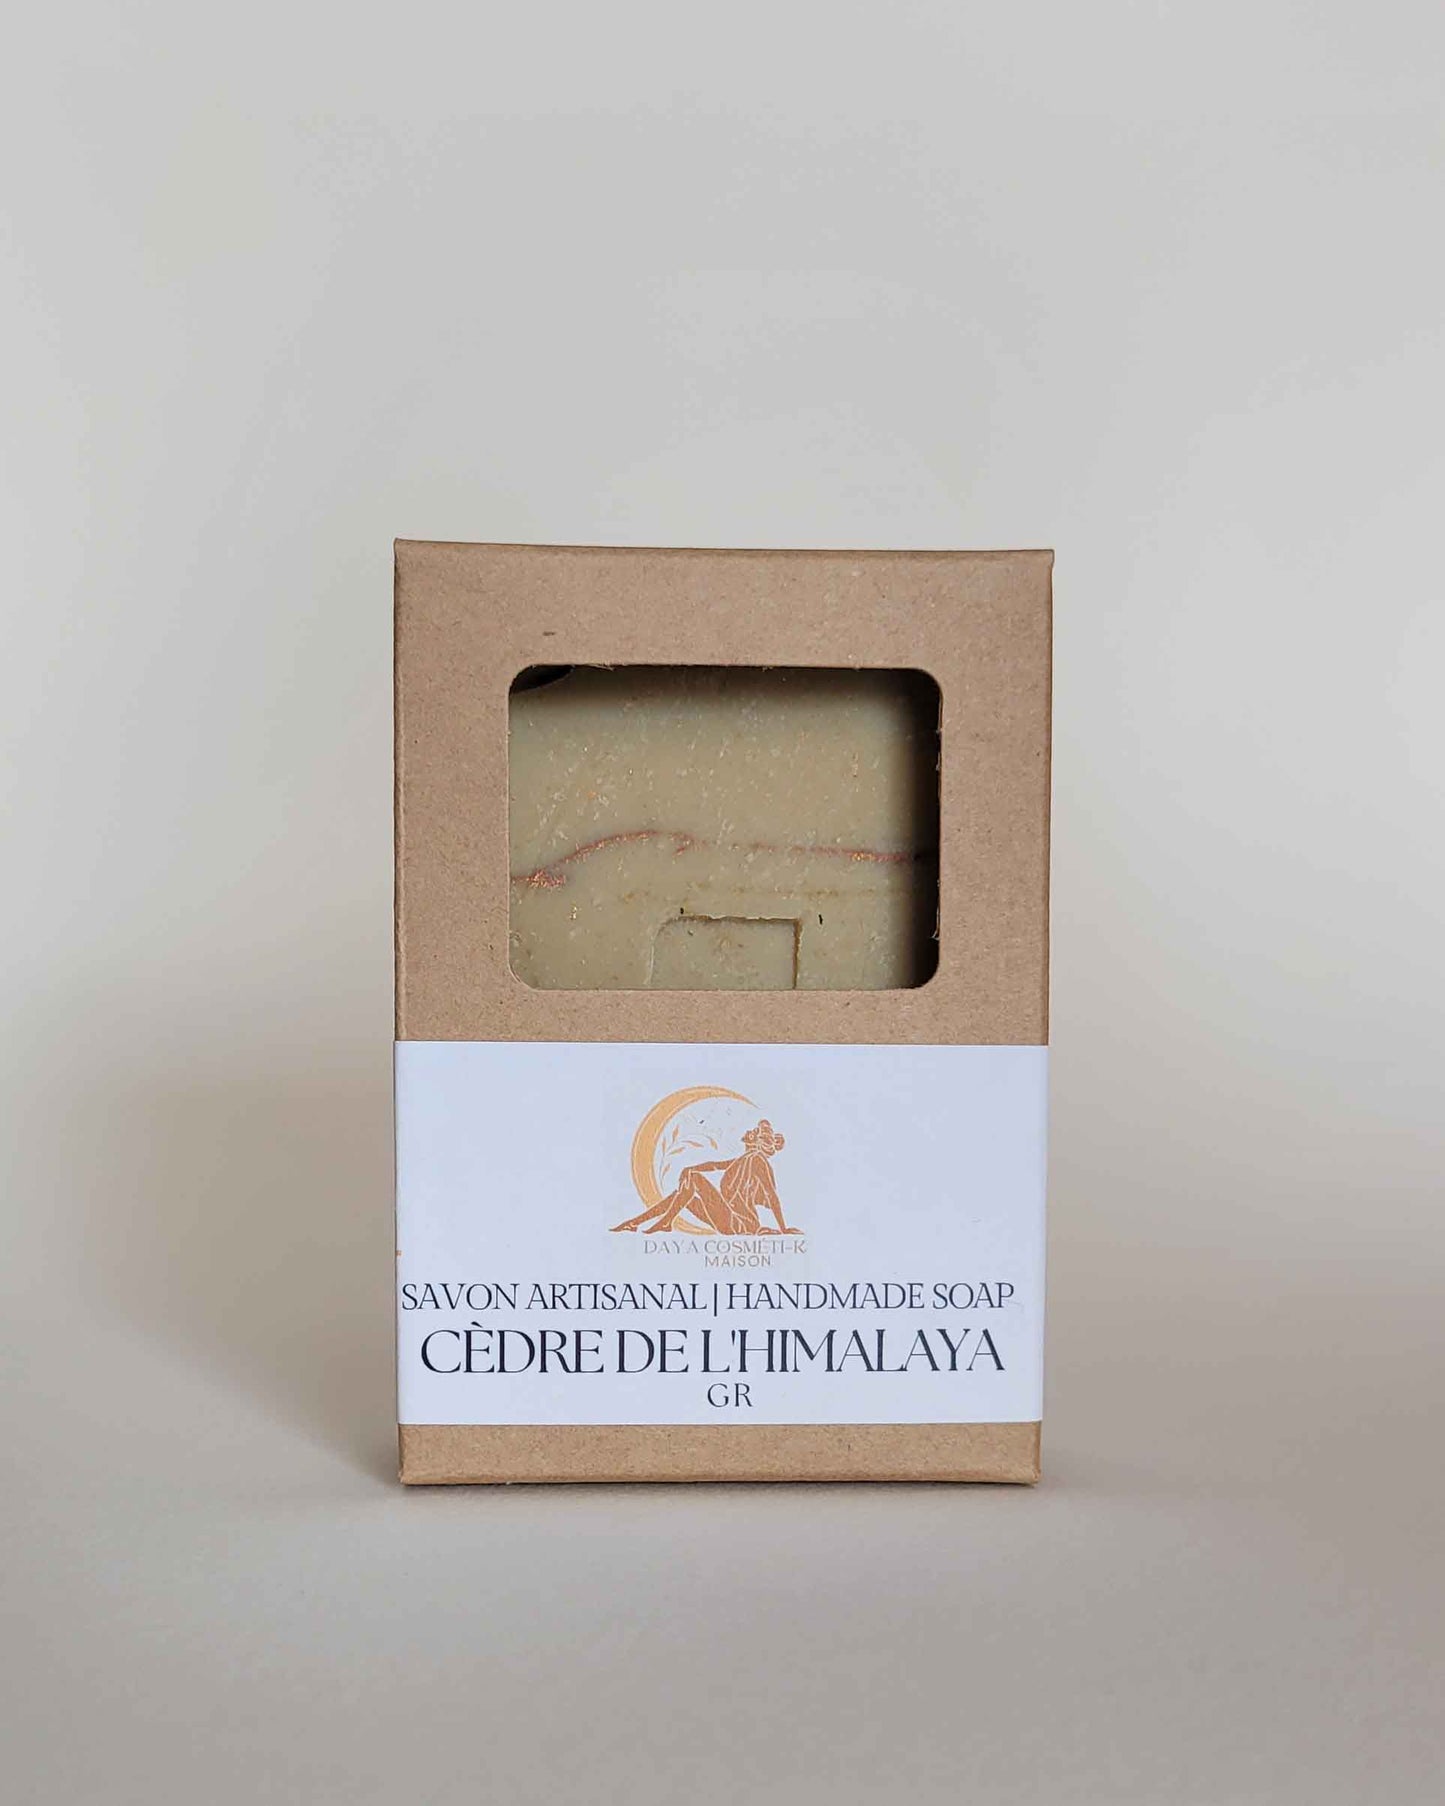 HANDMADE SOAP: HIMALAYAN CEDAR / CEDRO DEL HIMALAYA